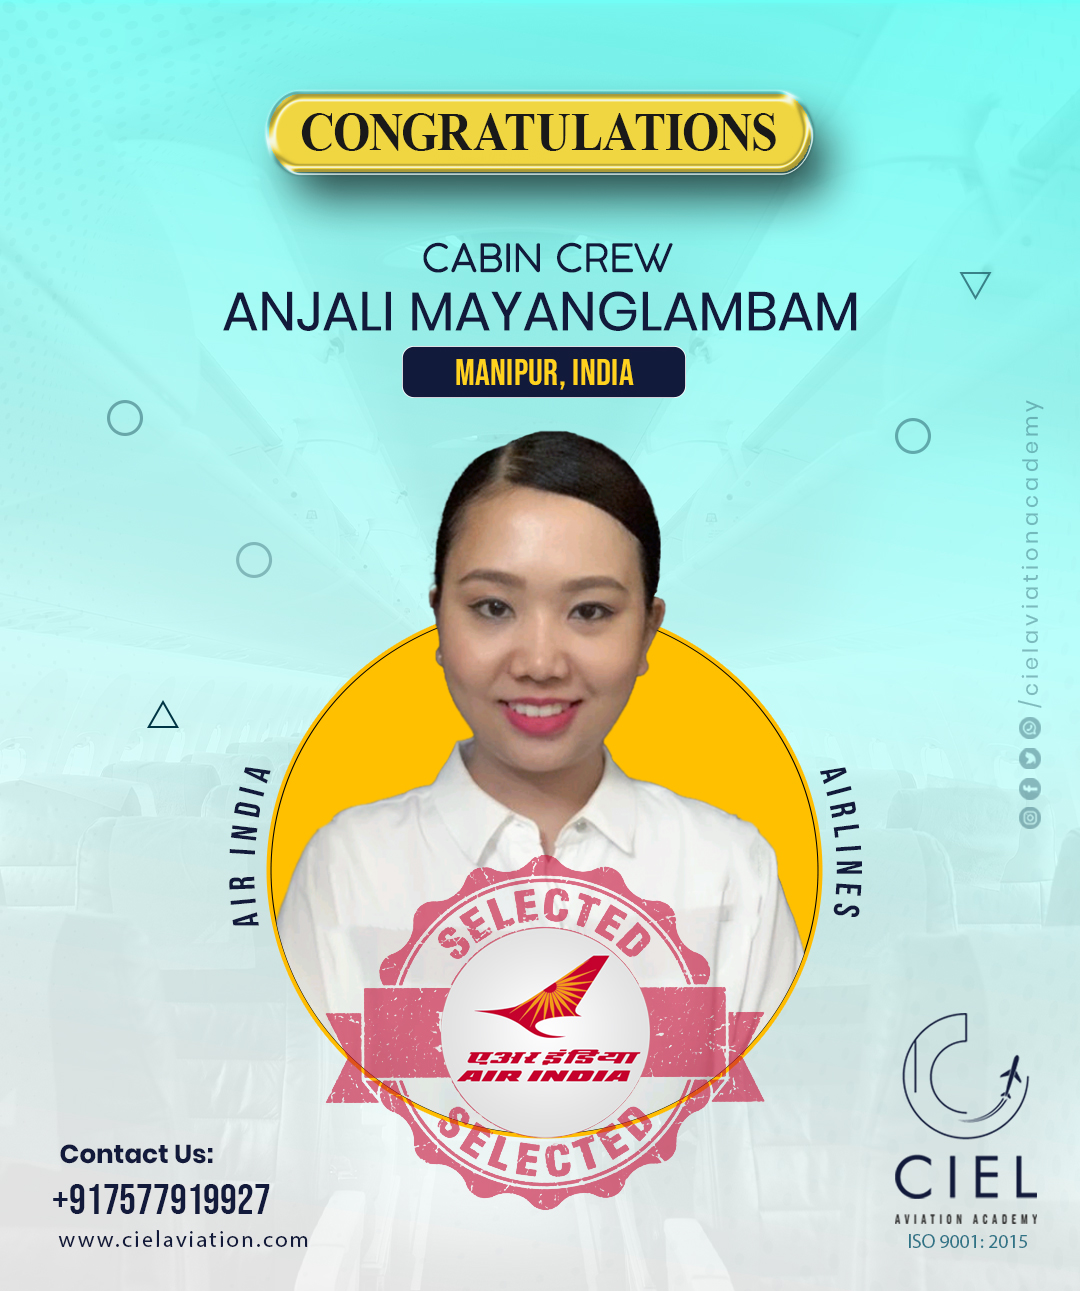 Ciel Aviation Academy - Anjali Mayanglambam